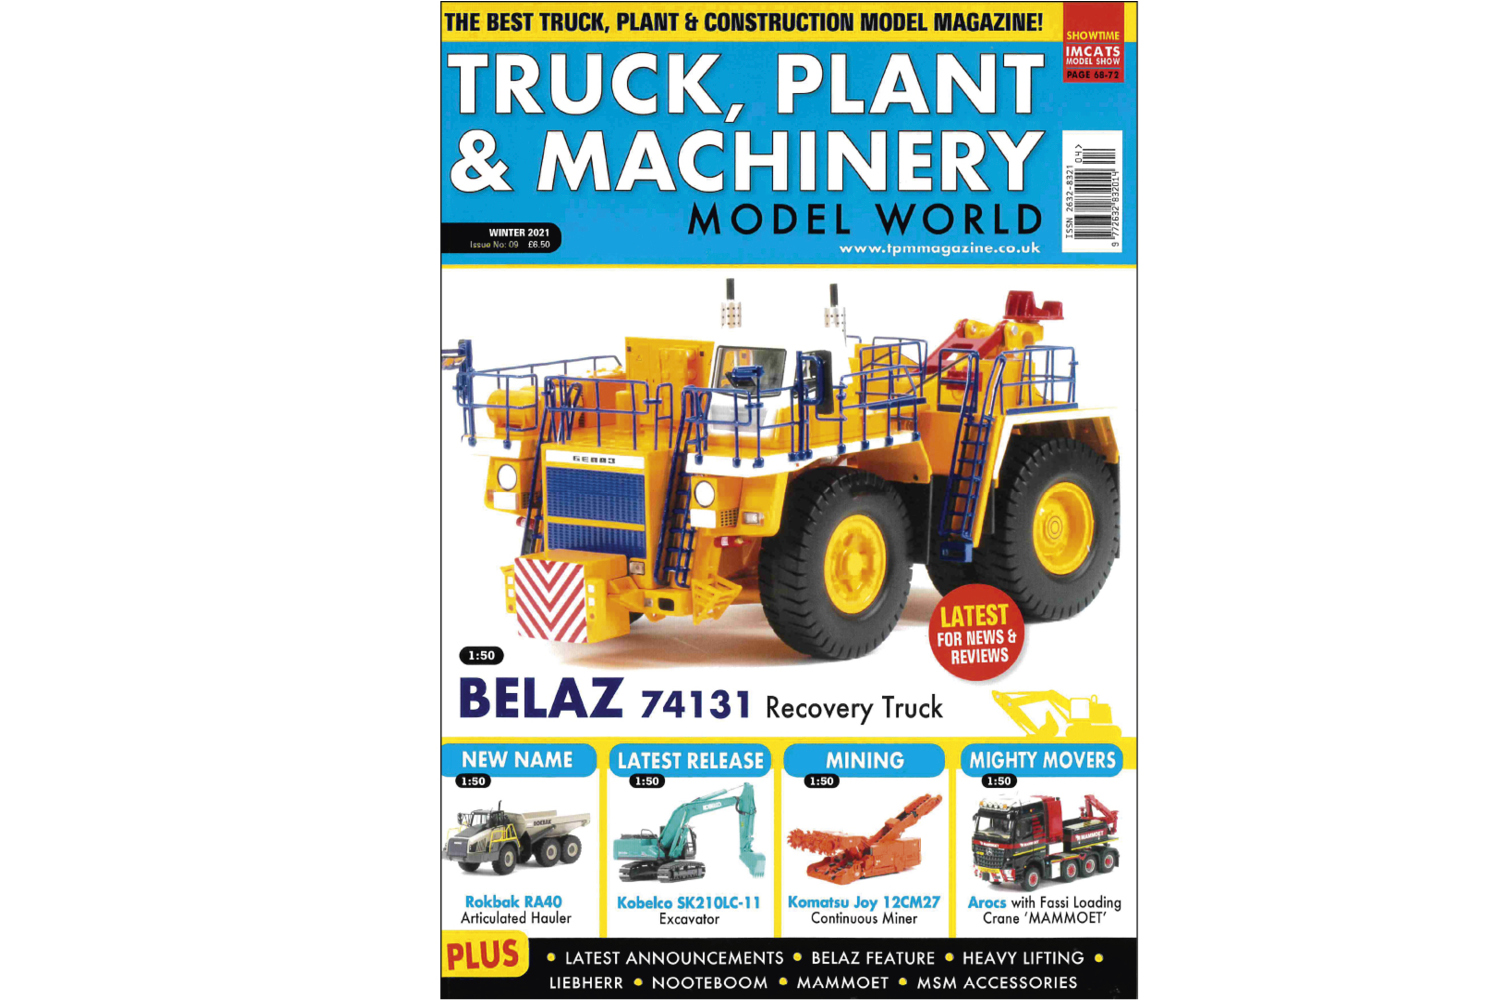 The trade magazine "Truck, Plant & Machinery" reports on Conrad